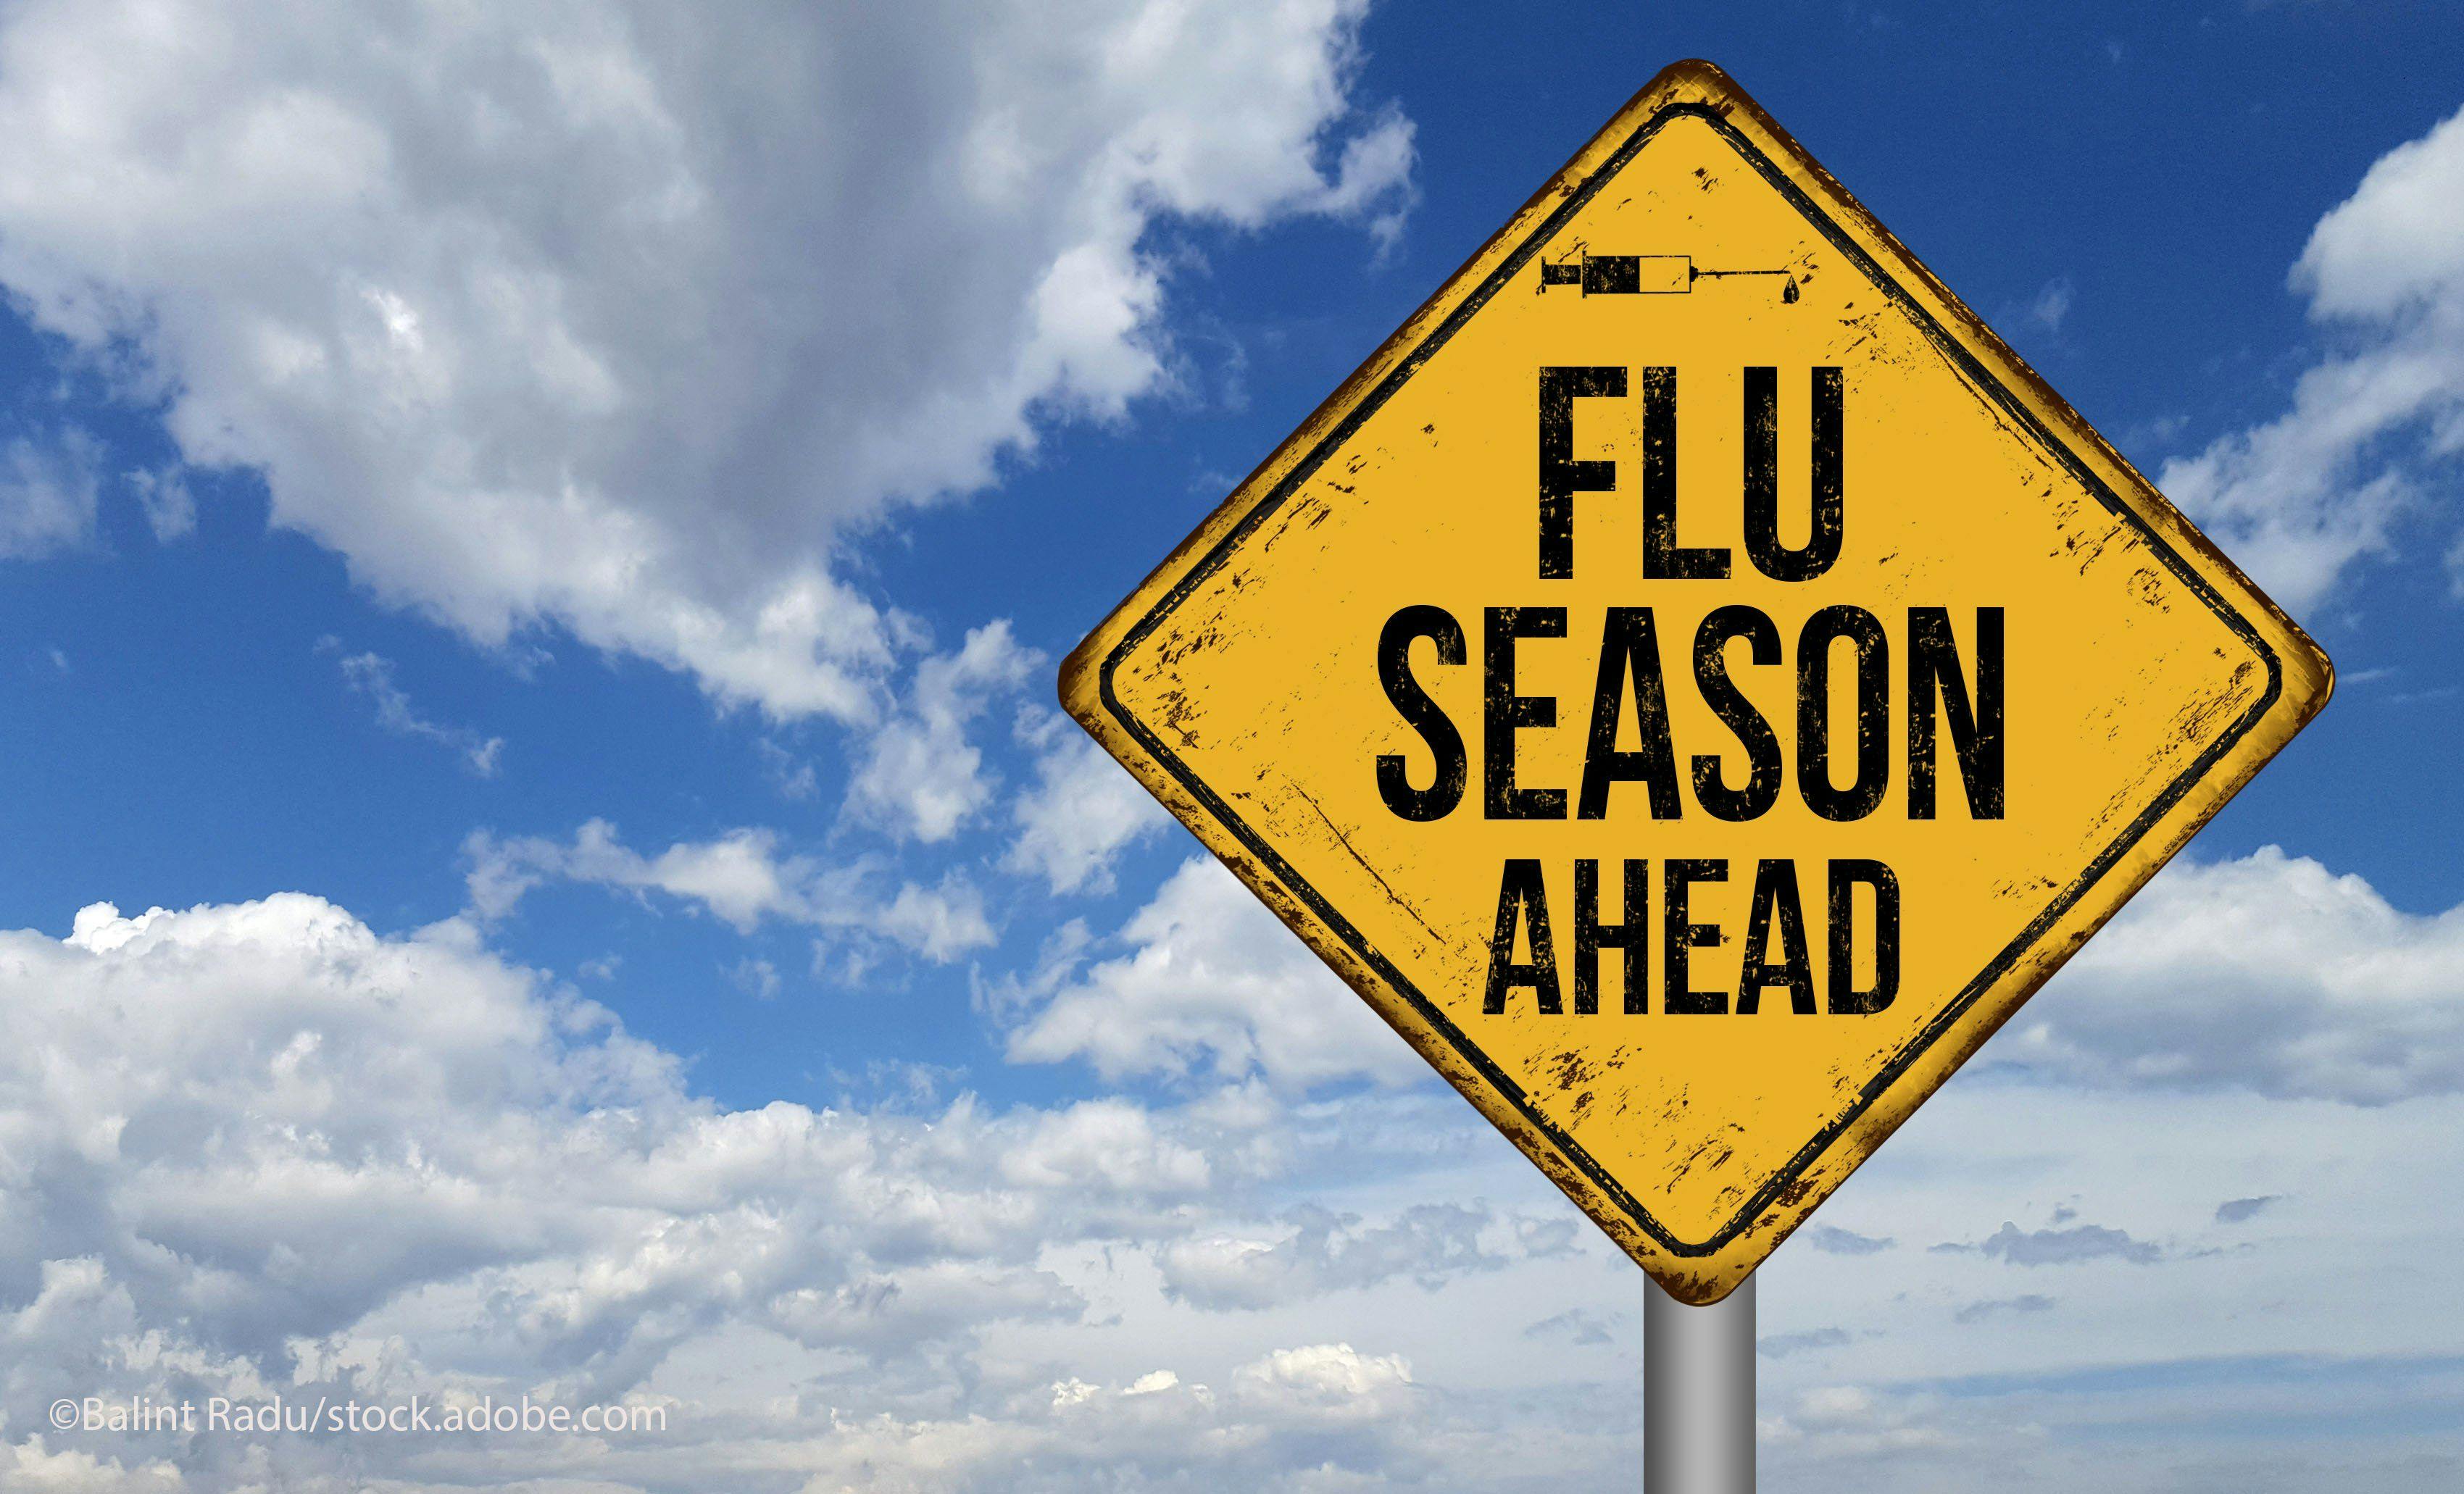 Telemedicine emerging as a first line of defense during flu season